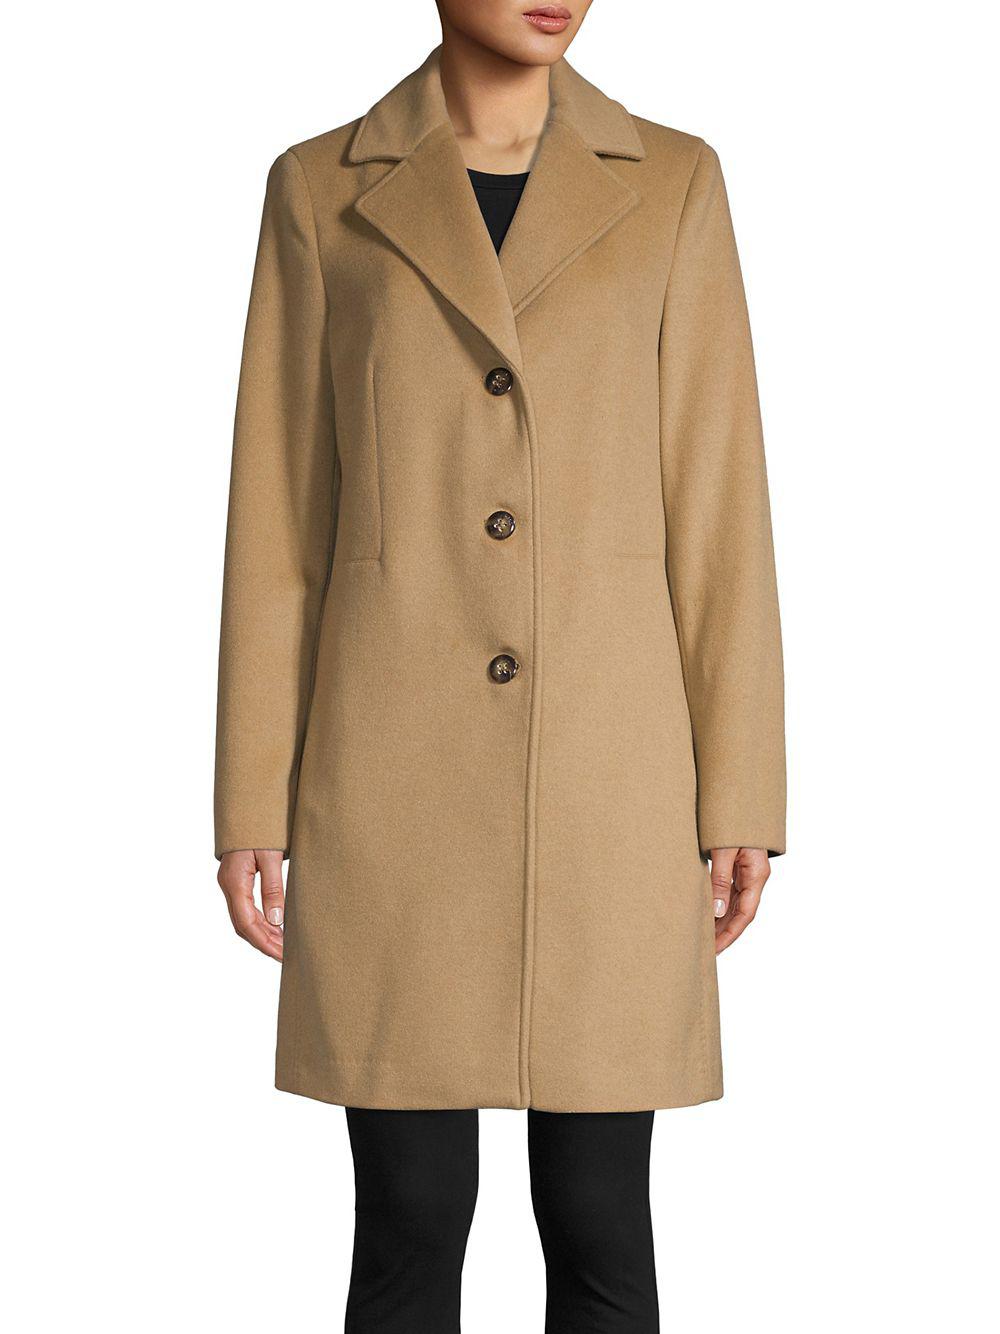 Calvin Klein Long Wool-blend Coat in Natural - Lyst